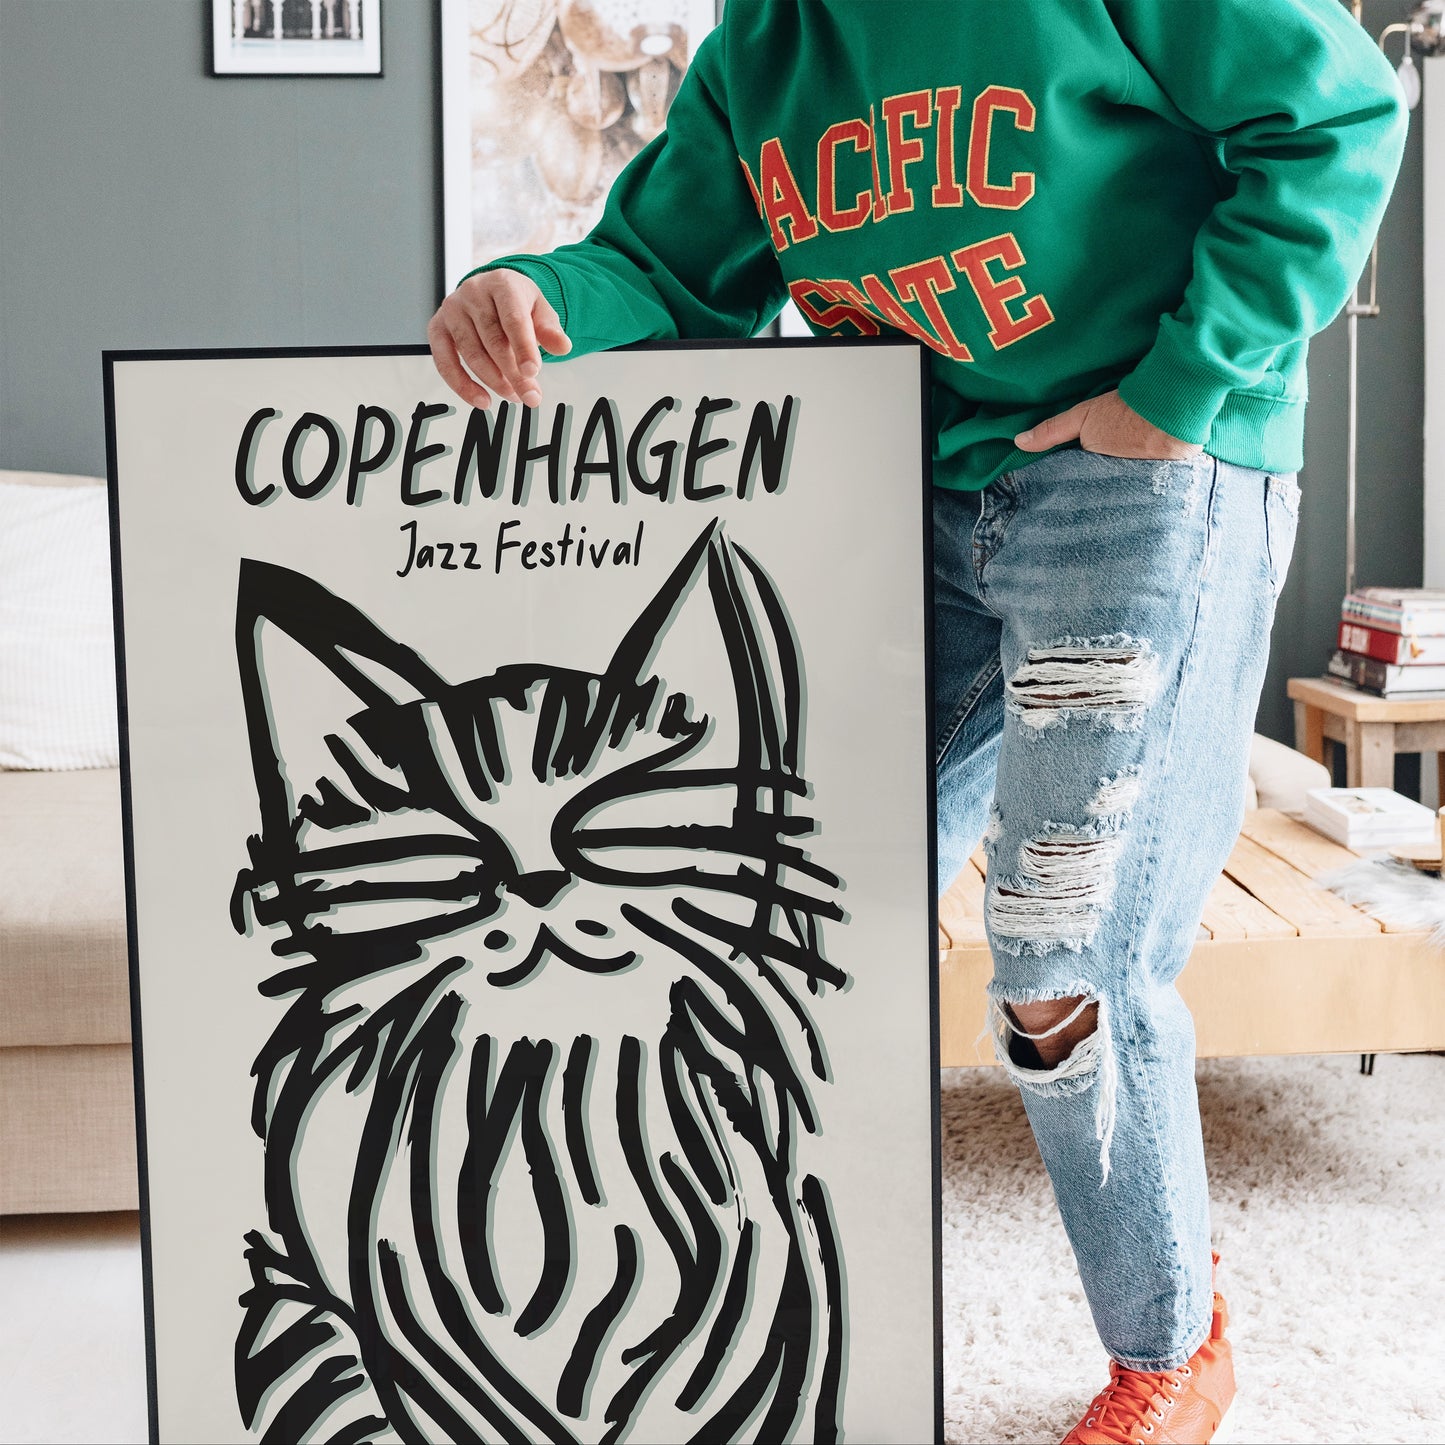 Copenhagen Jazz Festival Cat Poster